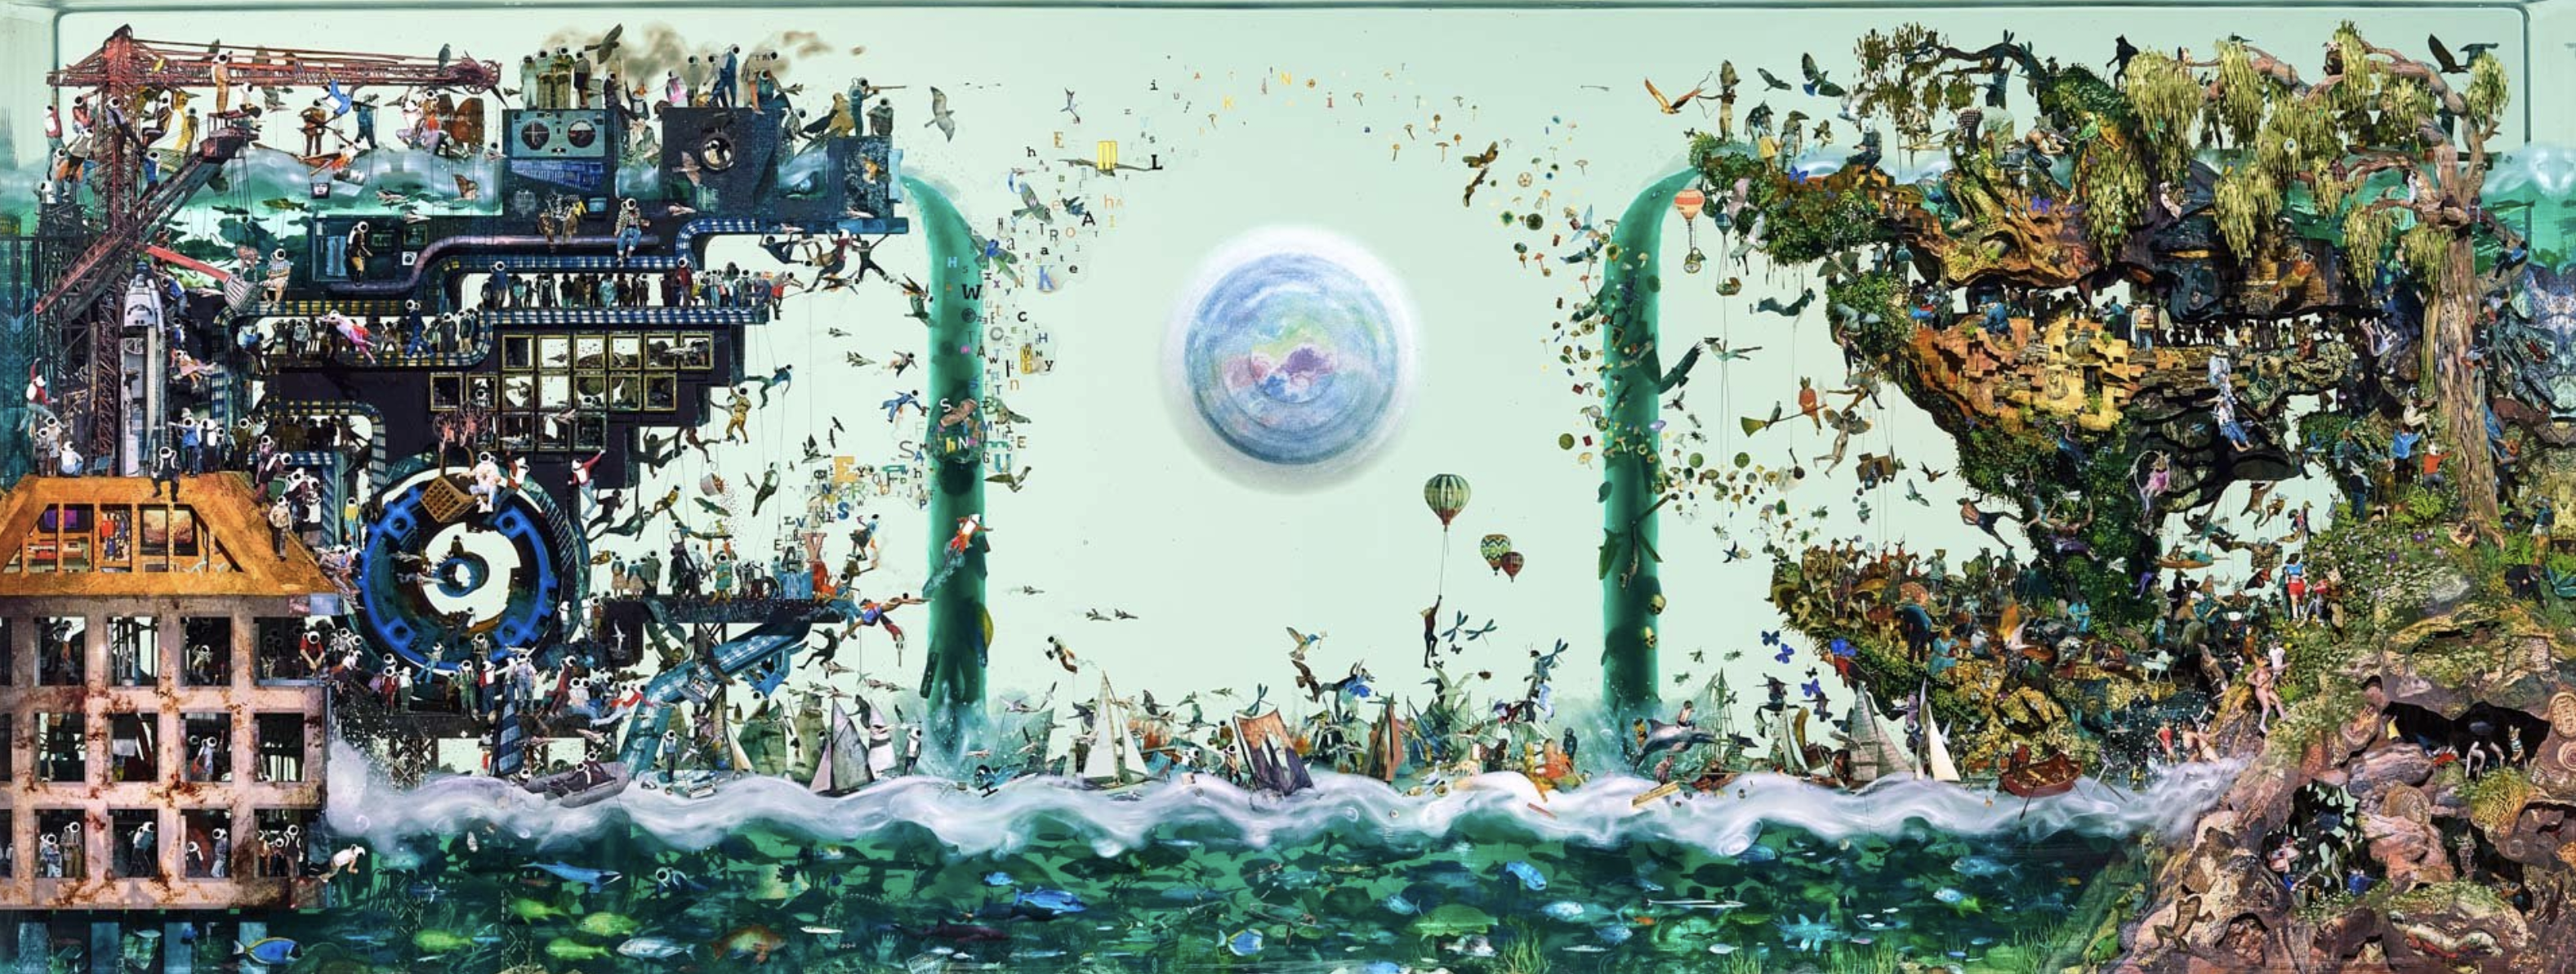 Dustin Yellin imagó este "Ministry for Water" para "Ancient Future", muestra de Miami Art Week 2022.